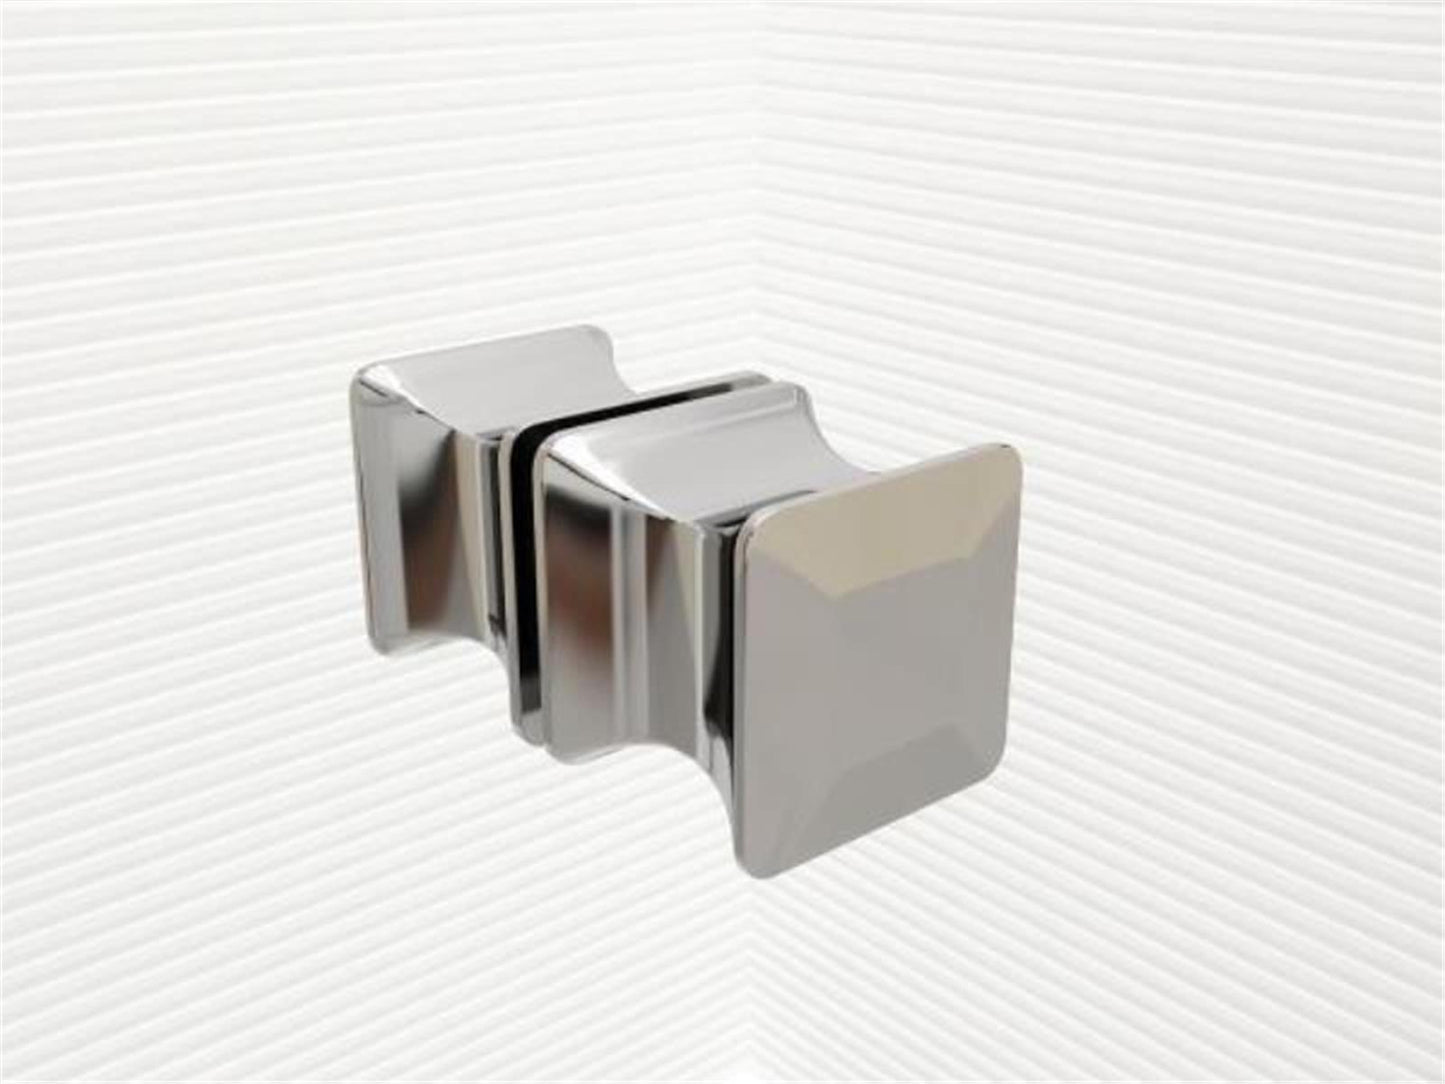 GlasHomeCenter - Cabina de ducha en forma de U "Asuka" (120x80x195cm) - 8mm - cabina de ducha de esquina - mampara de ducha - sin plato de ducha